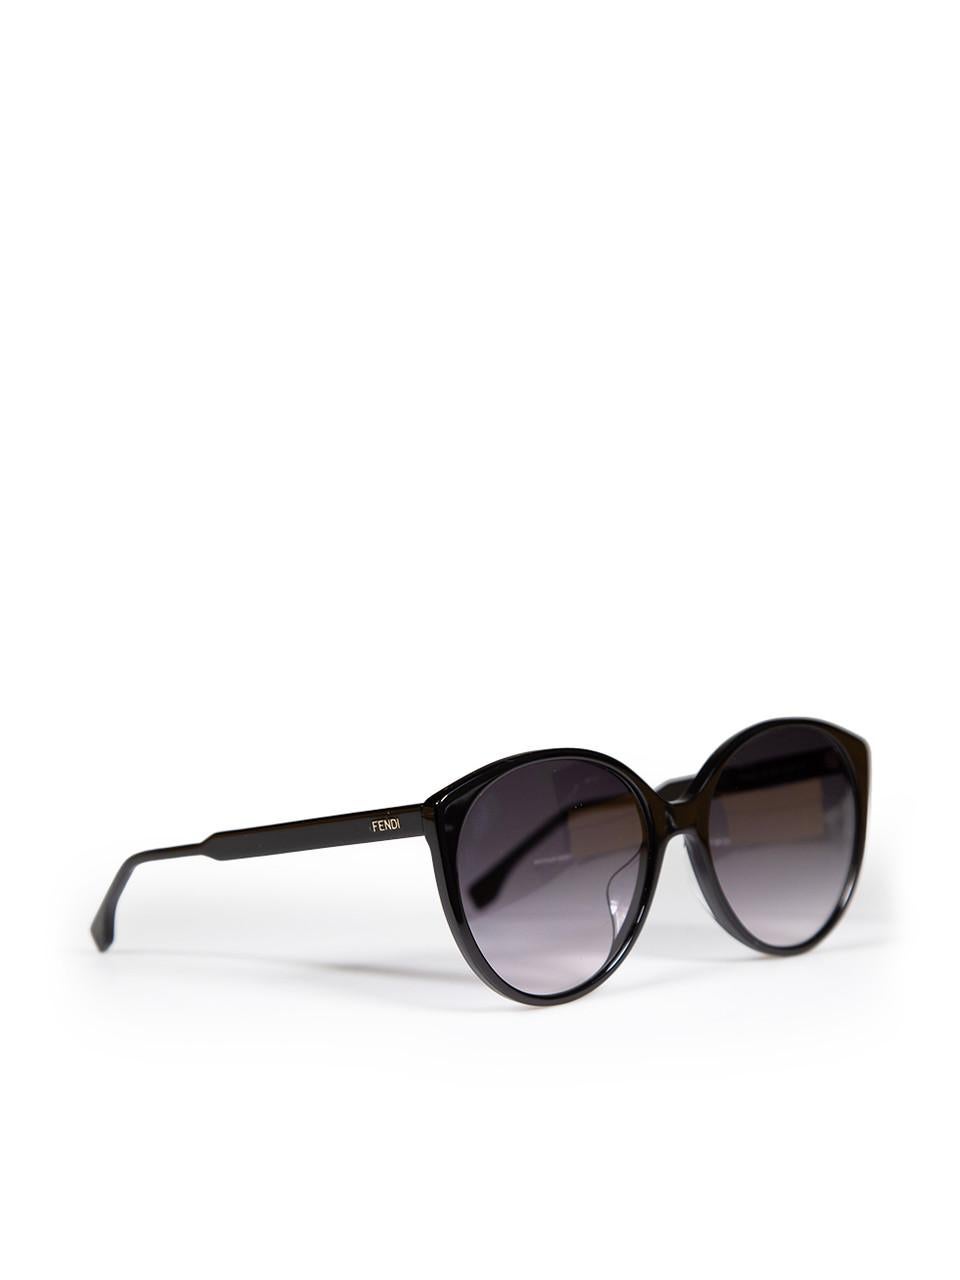 Fendi Black Gradient Smoke Cat Eye Sunglasses In New Condition For Sale In London, GB